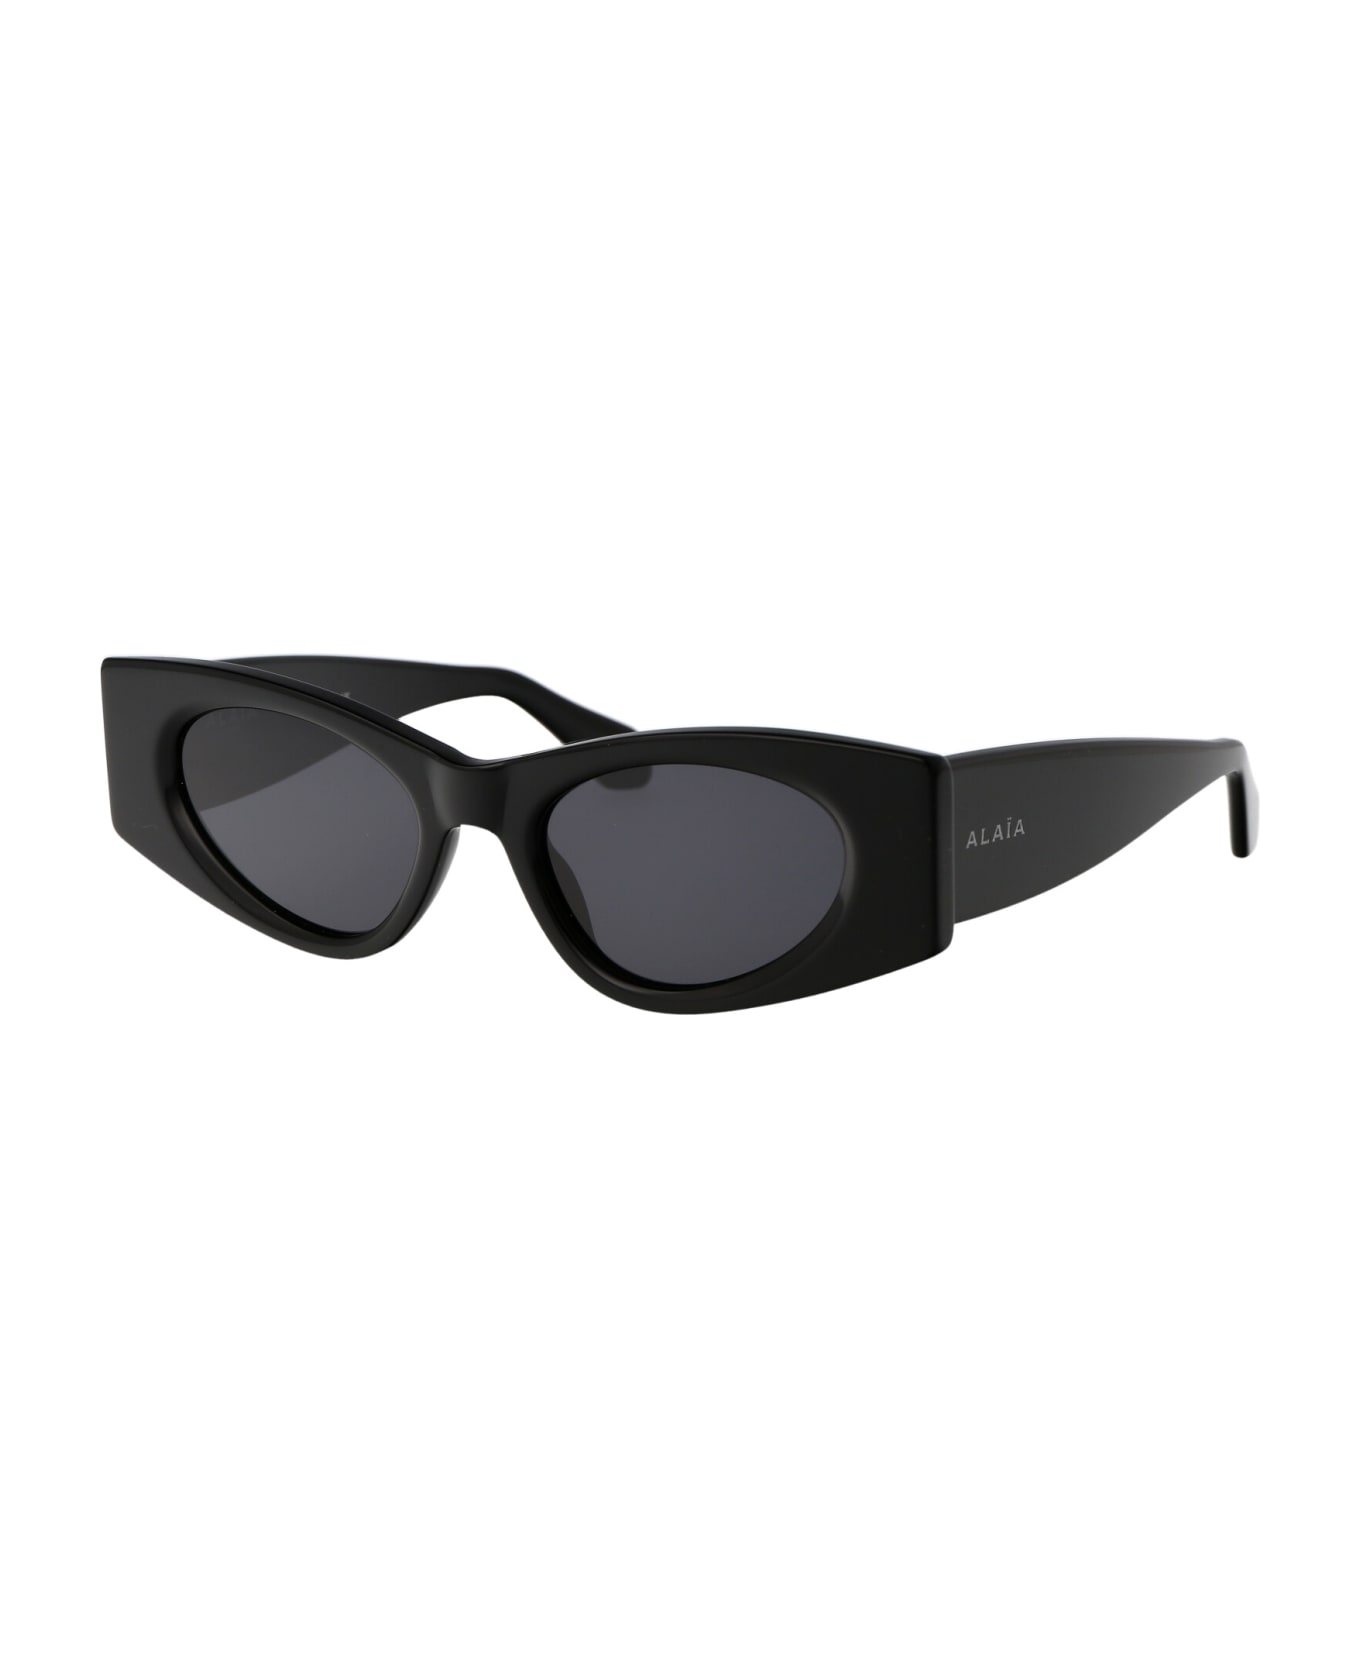 Alaia Aa0075s Sunglasses - 001 BLACK BLACK GREY